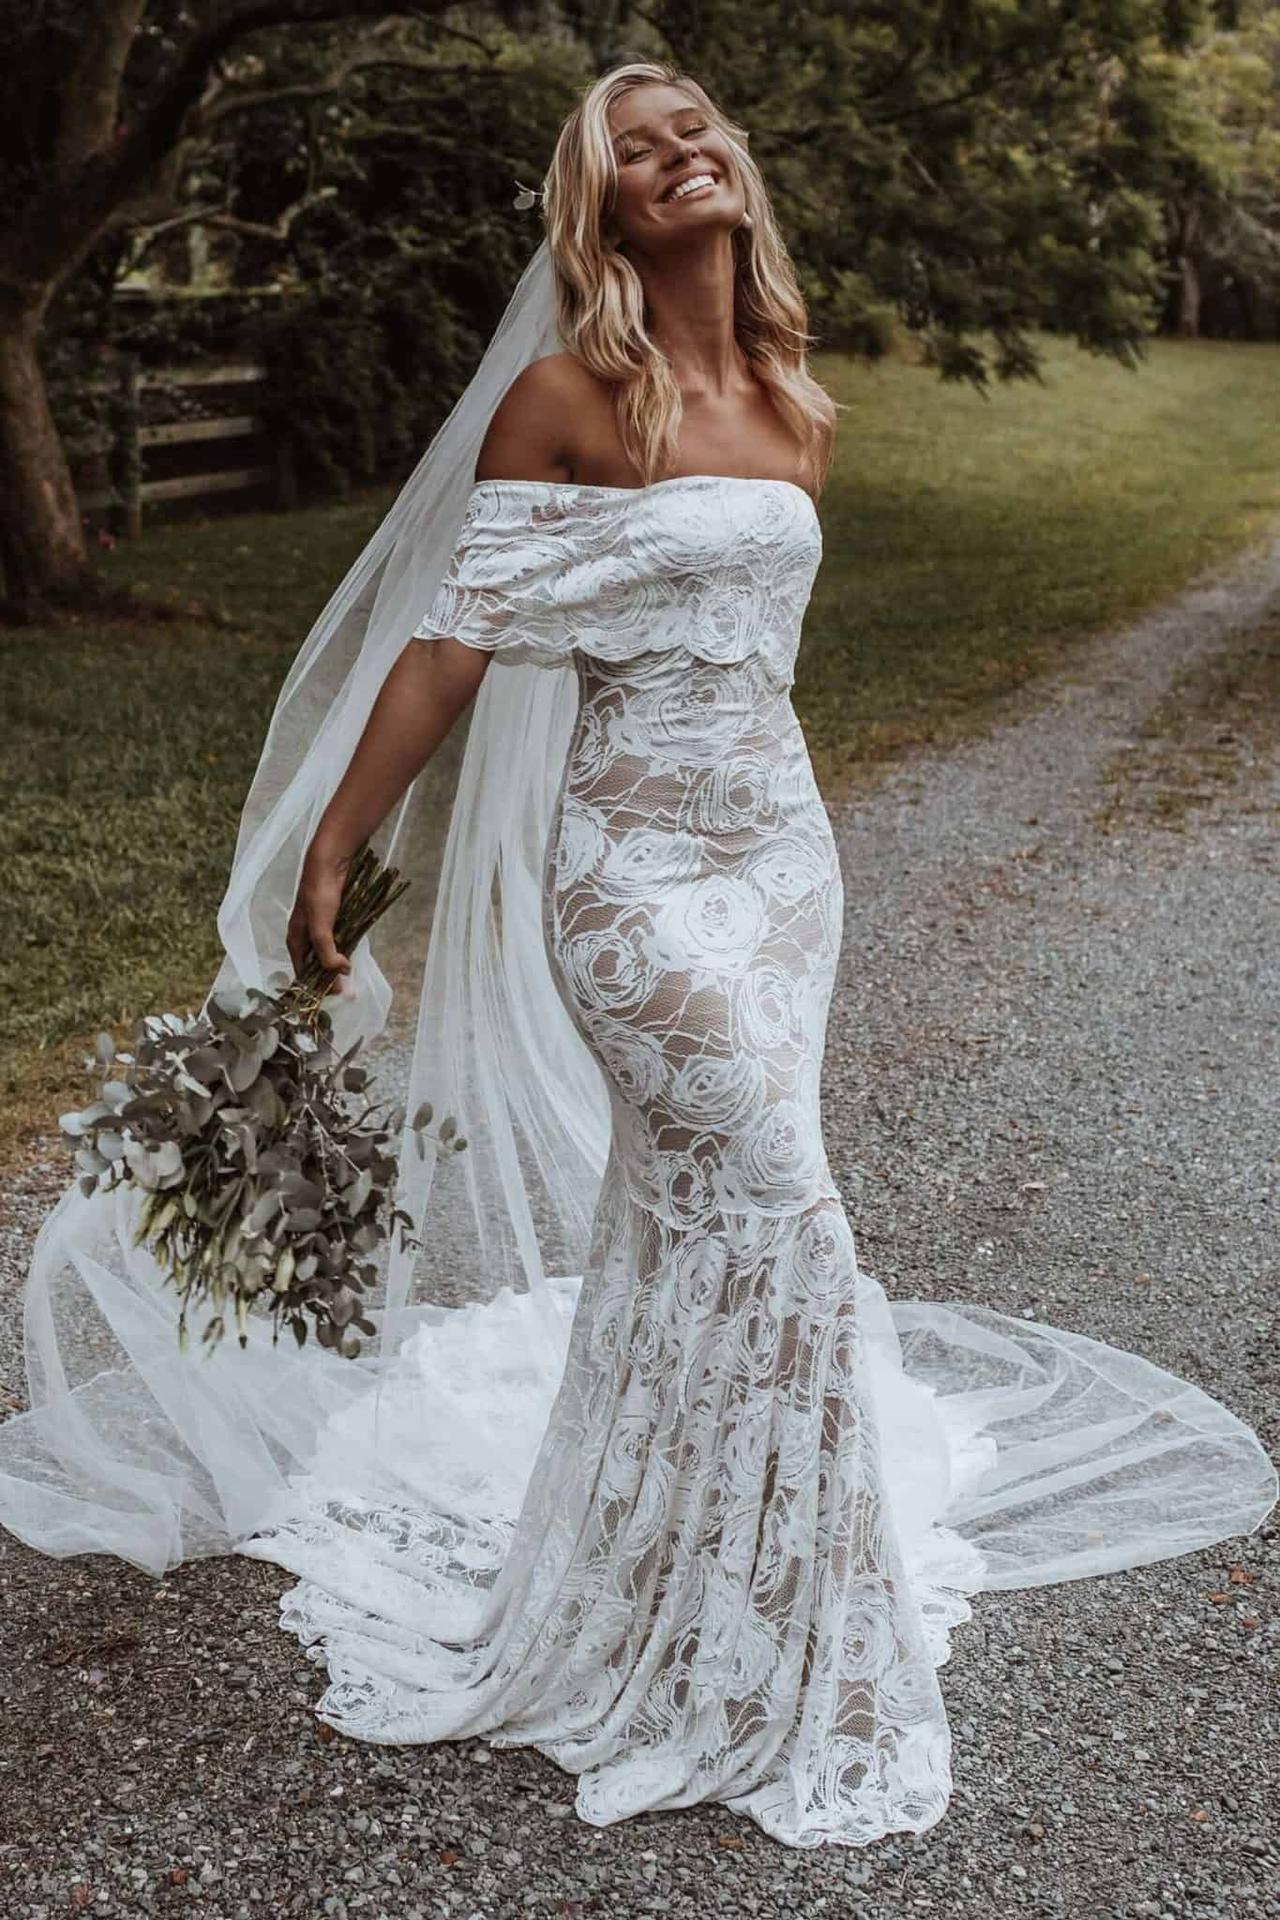 https://cdn0.hitched.co.uk/article/7147/original/1280/jpg/67417-off-the-shoulder-wedding-dress-grace-loves-lace.jpeg